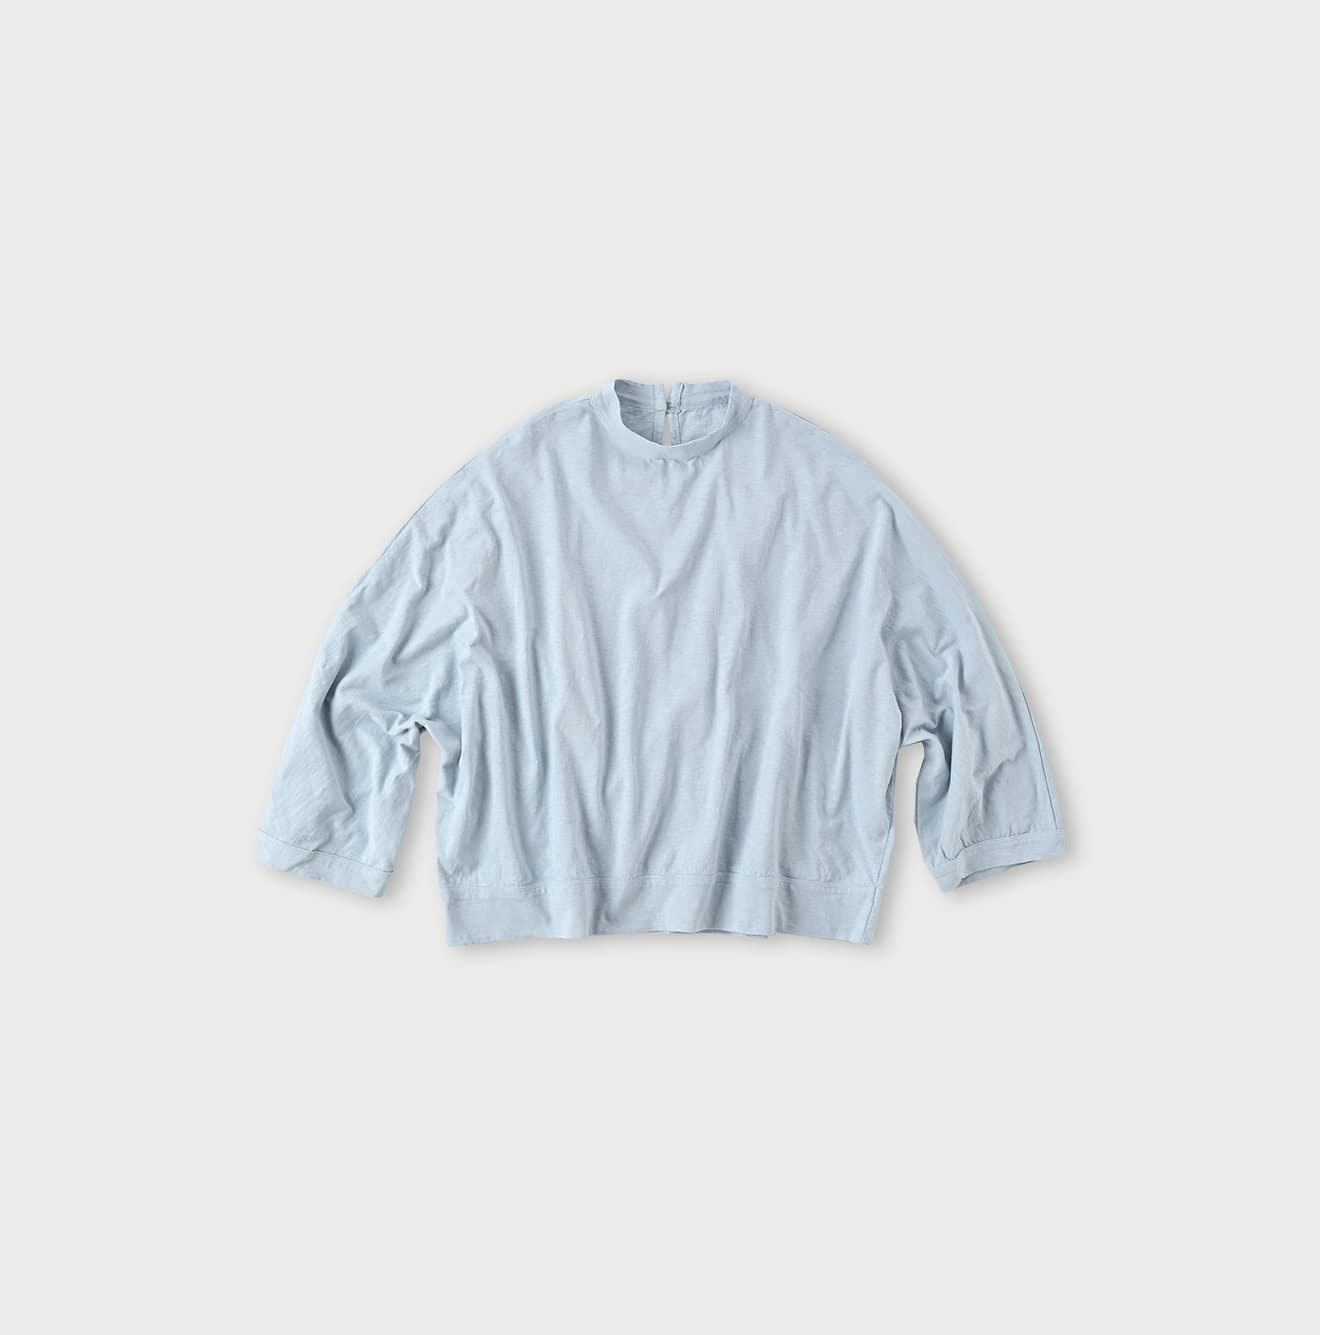 Karma / Dolman short sleeve T-shirt seamless sleeve top white - Shop  karma-design Men's T-Shirts & Tops - Pinkoi